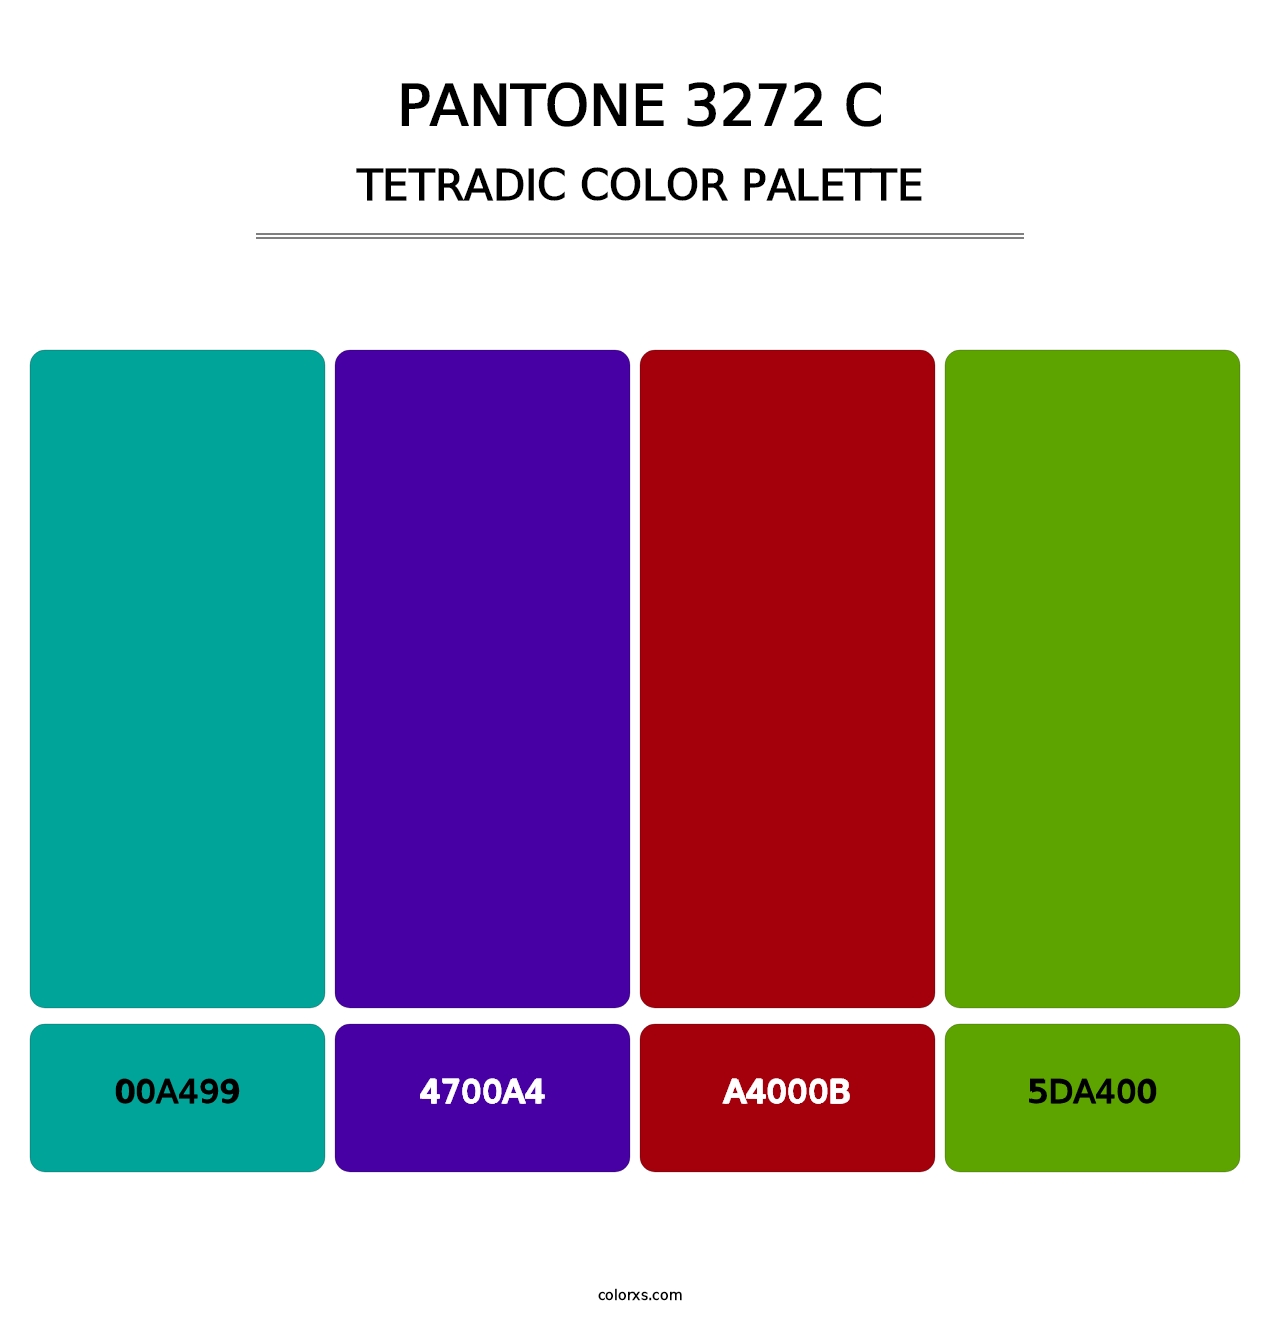 PANTONE 3272 C - Tetradic Color Palette